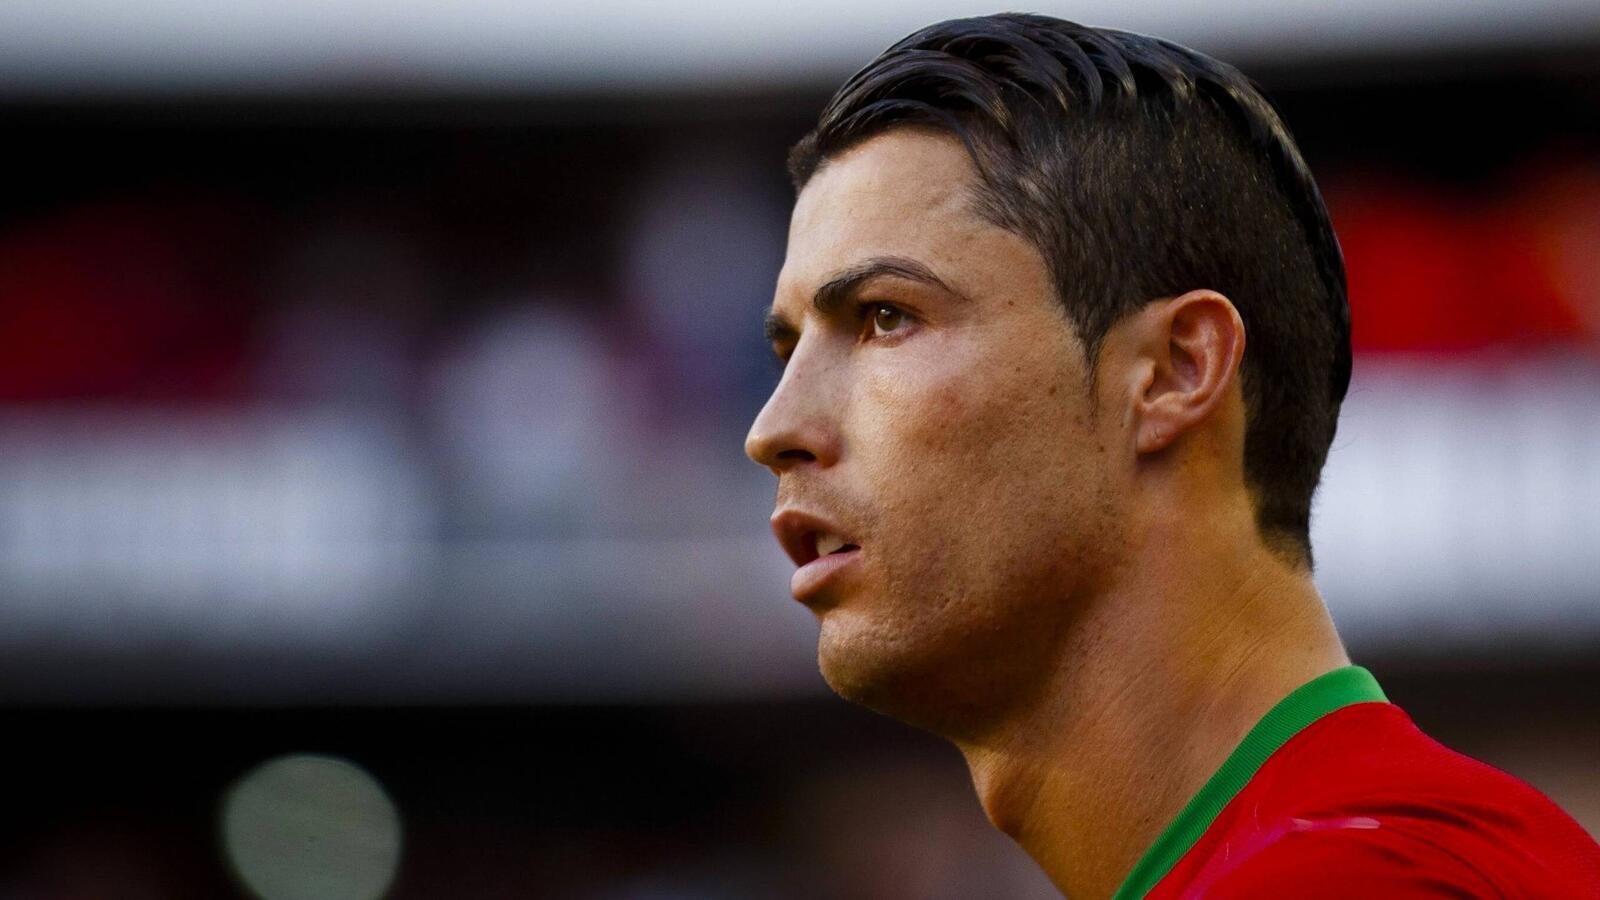 Wallpapers Cristiano Ronaldo footballer hairstyle on the desktop